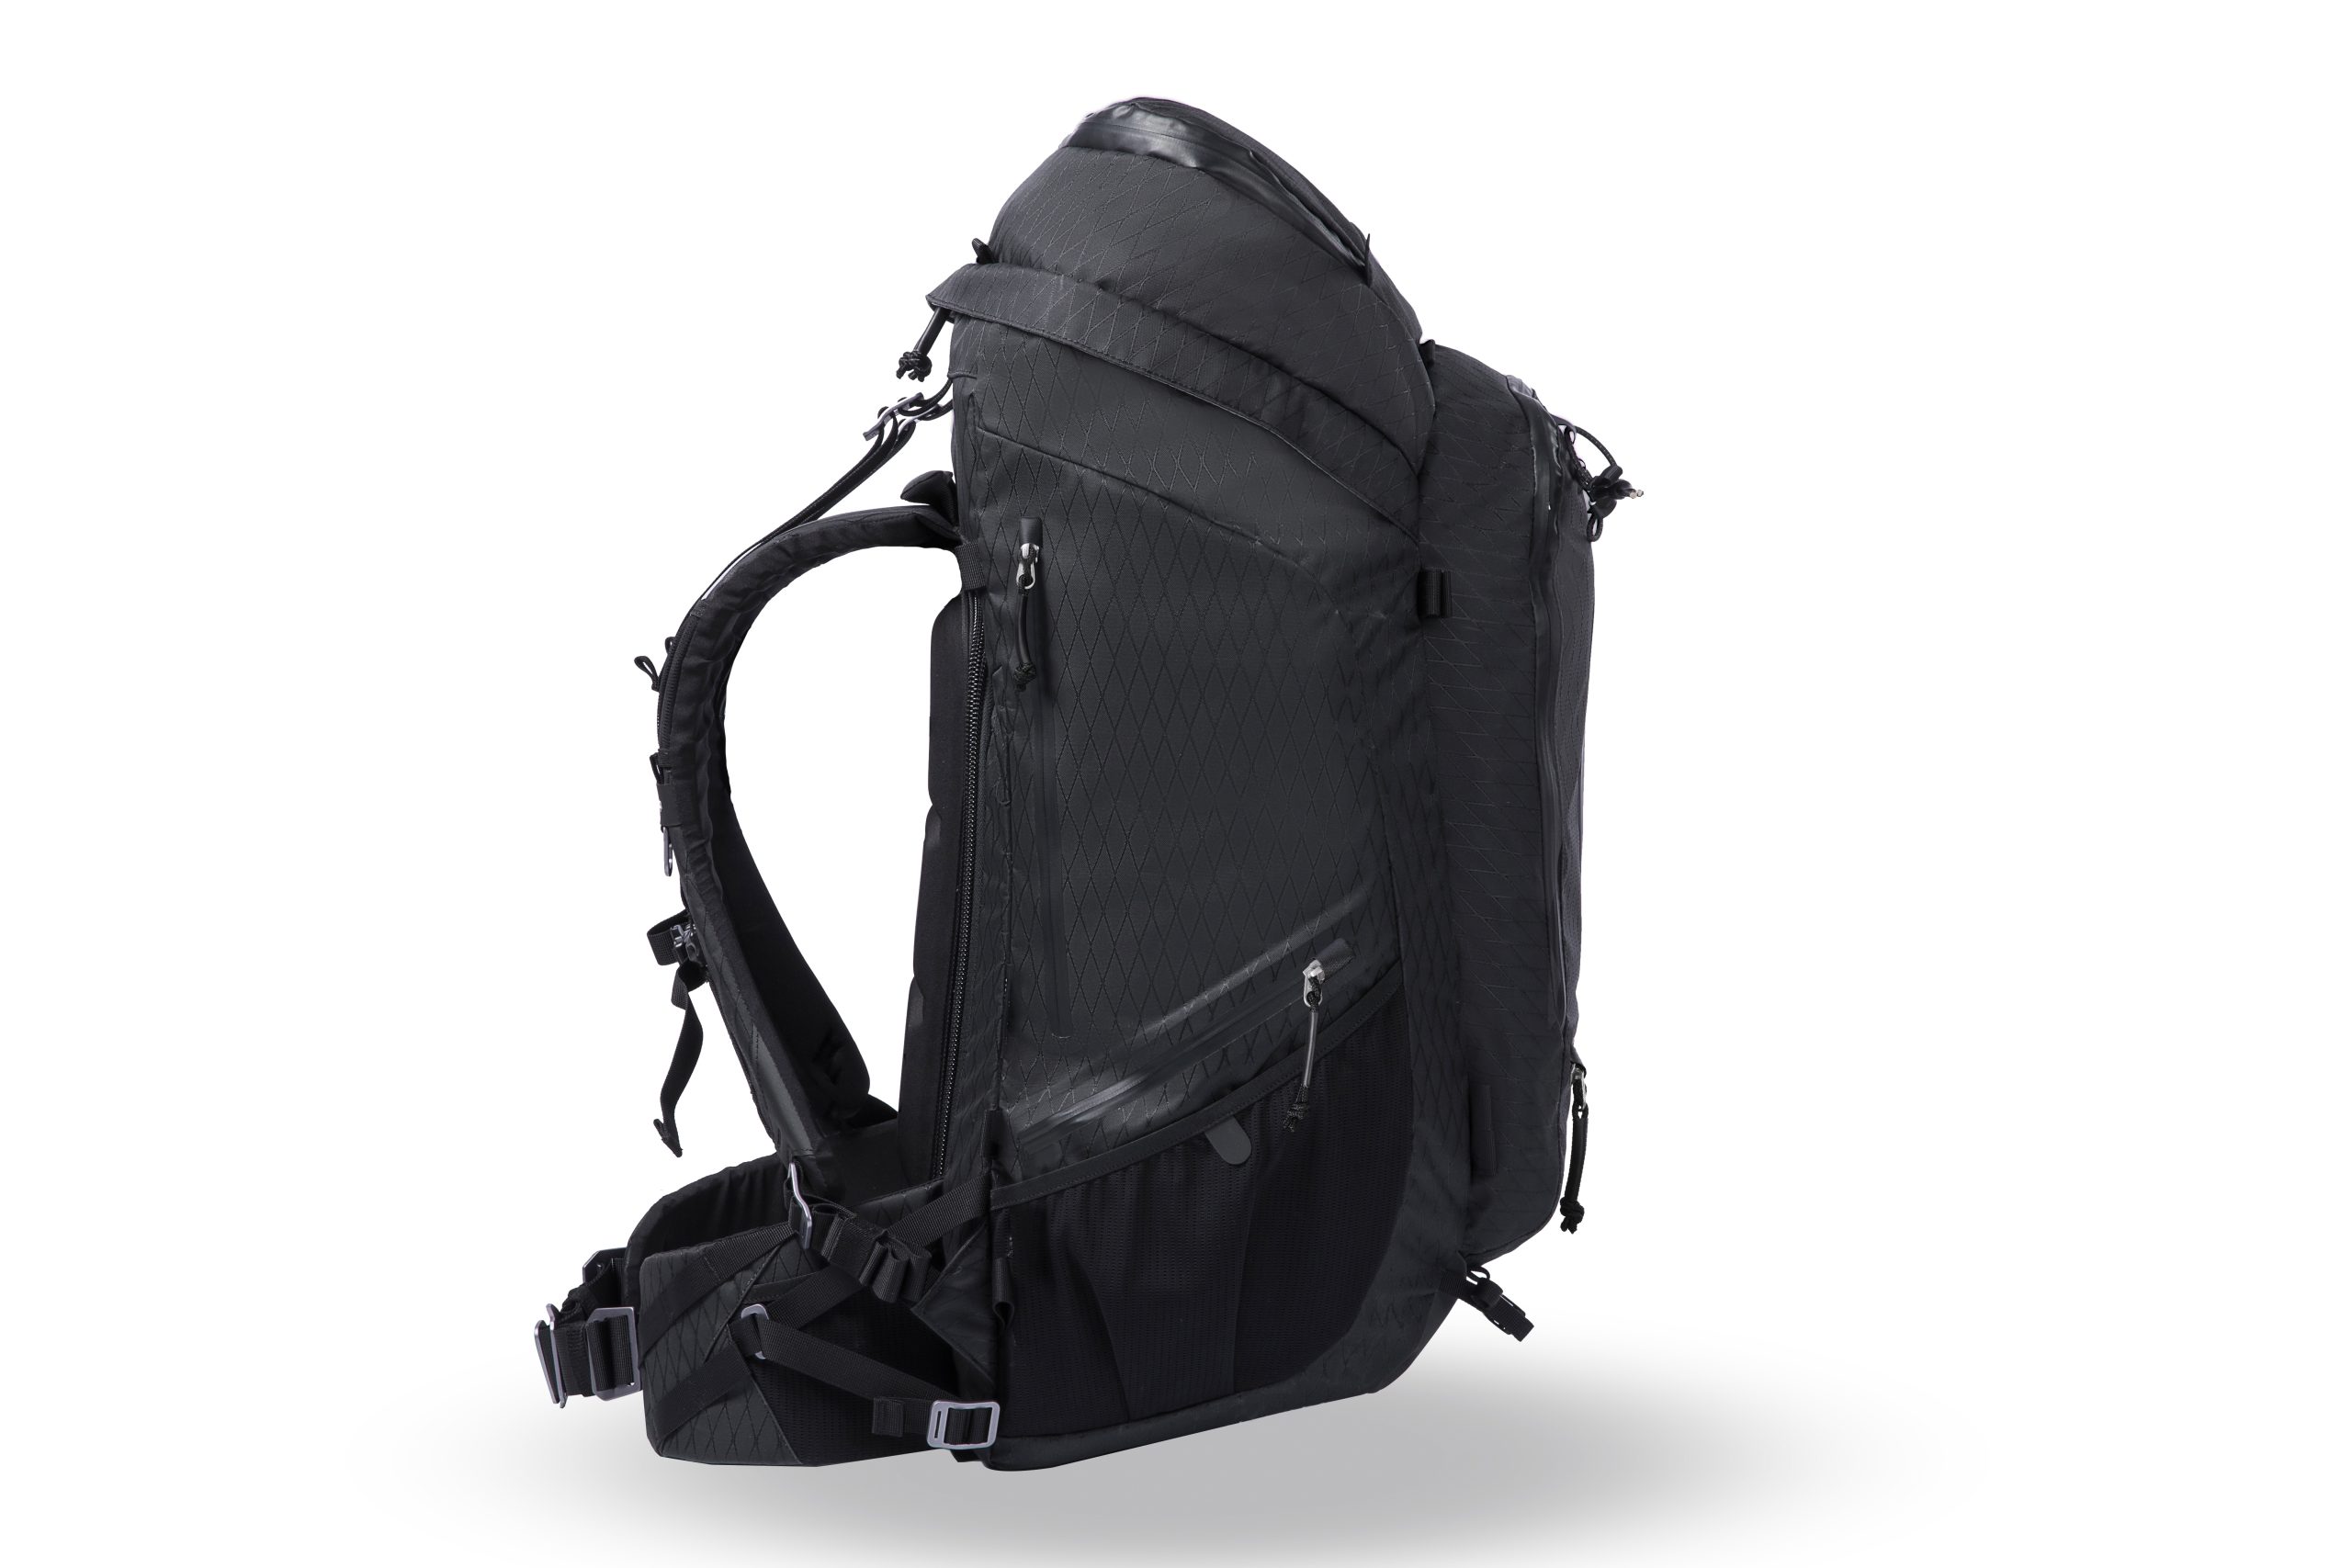 Companion E80 Backpack 80L Capacity